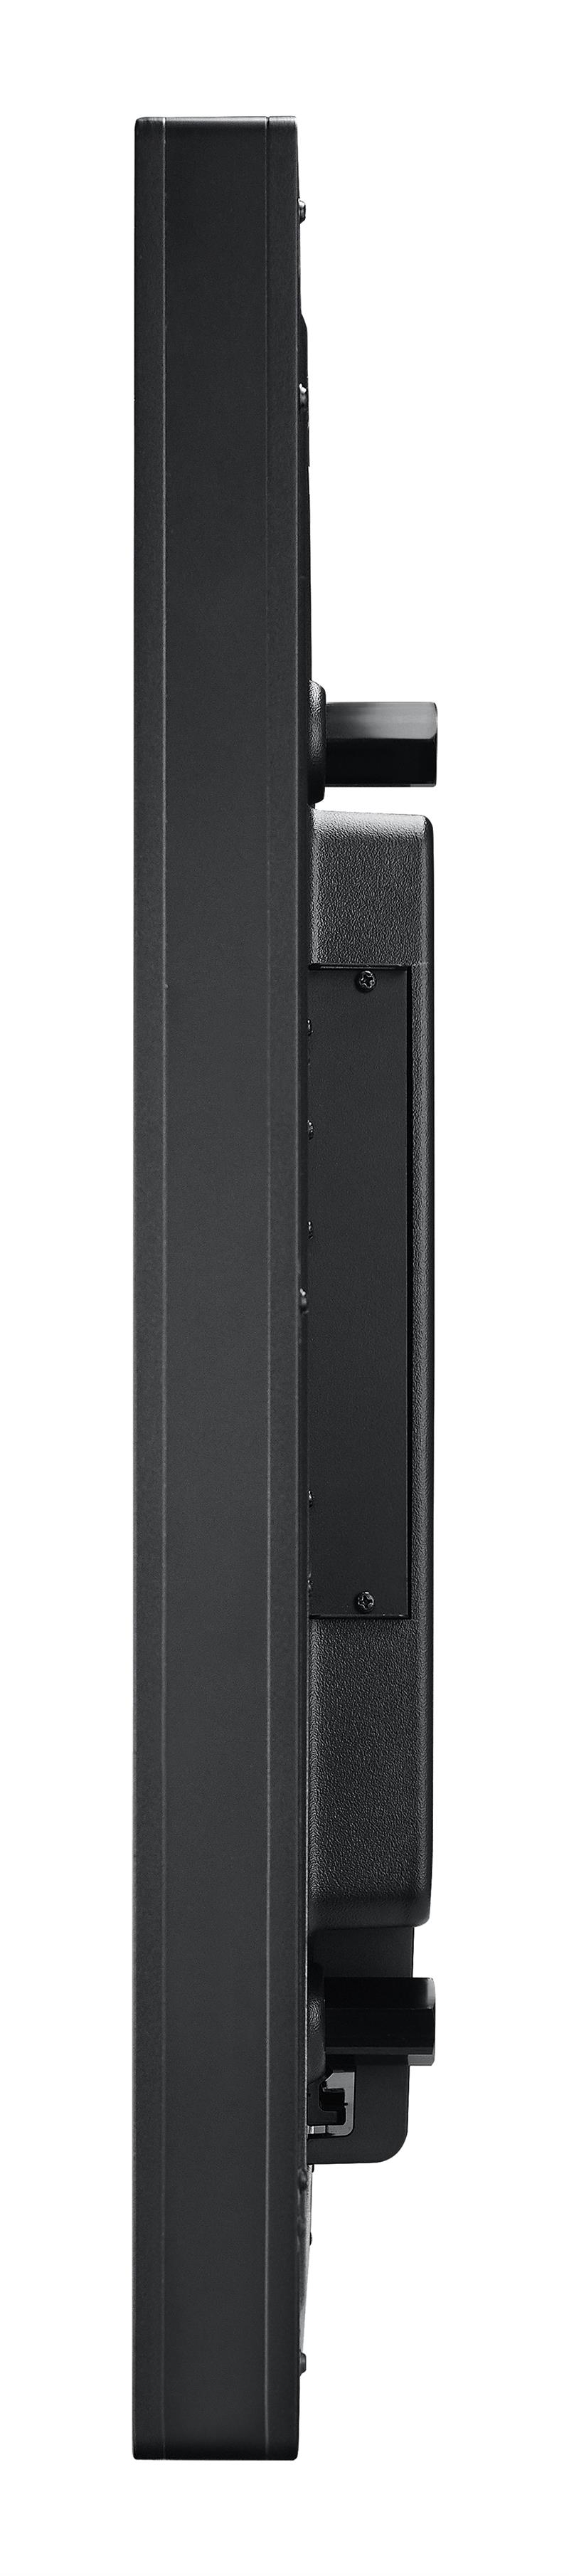 Neovo 43 inch Anti-Glare Full-HD LED Monitor